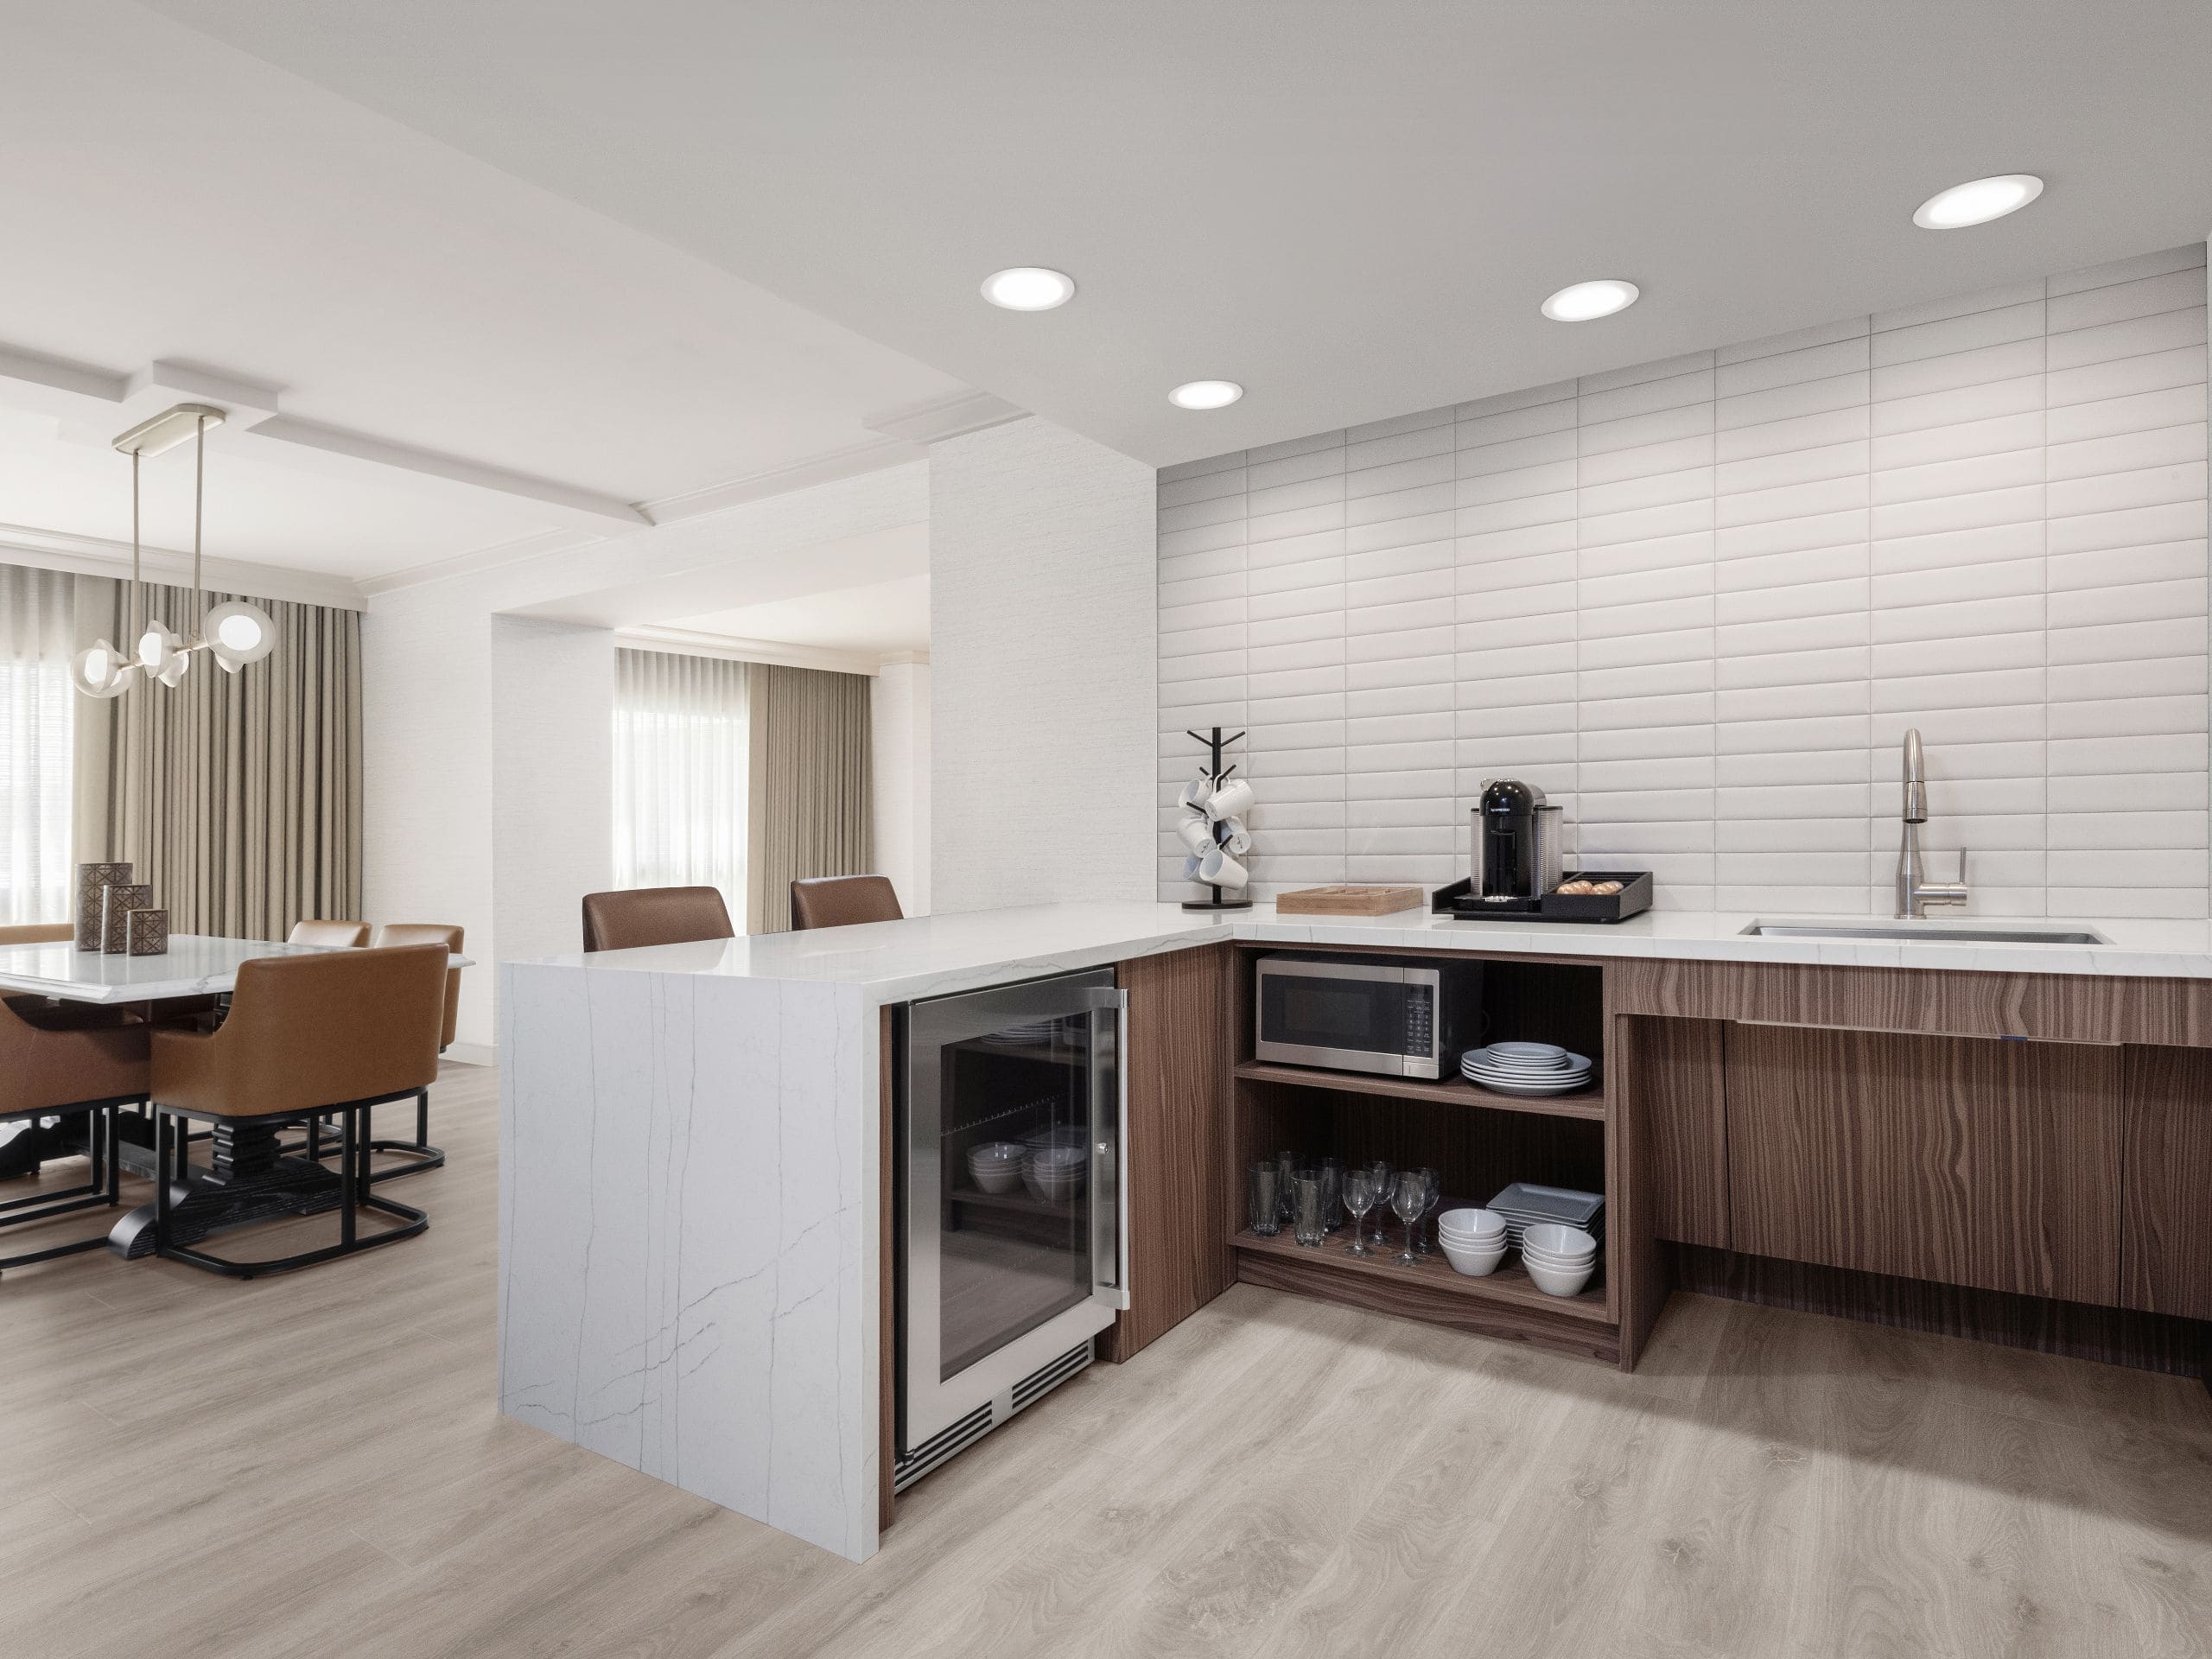 Hyatt Regency Irvine Accessibel Hospatality Suite Kitchen